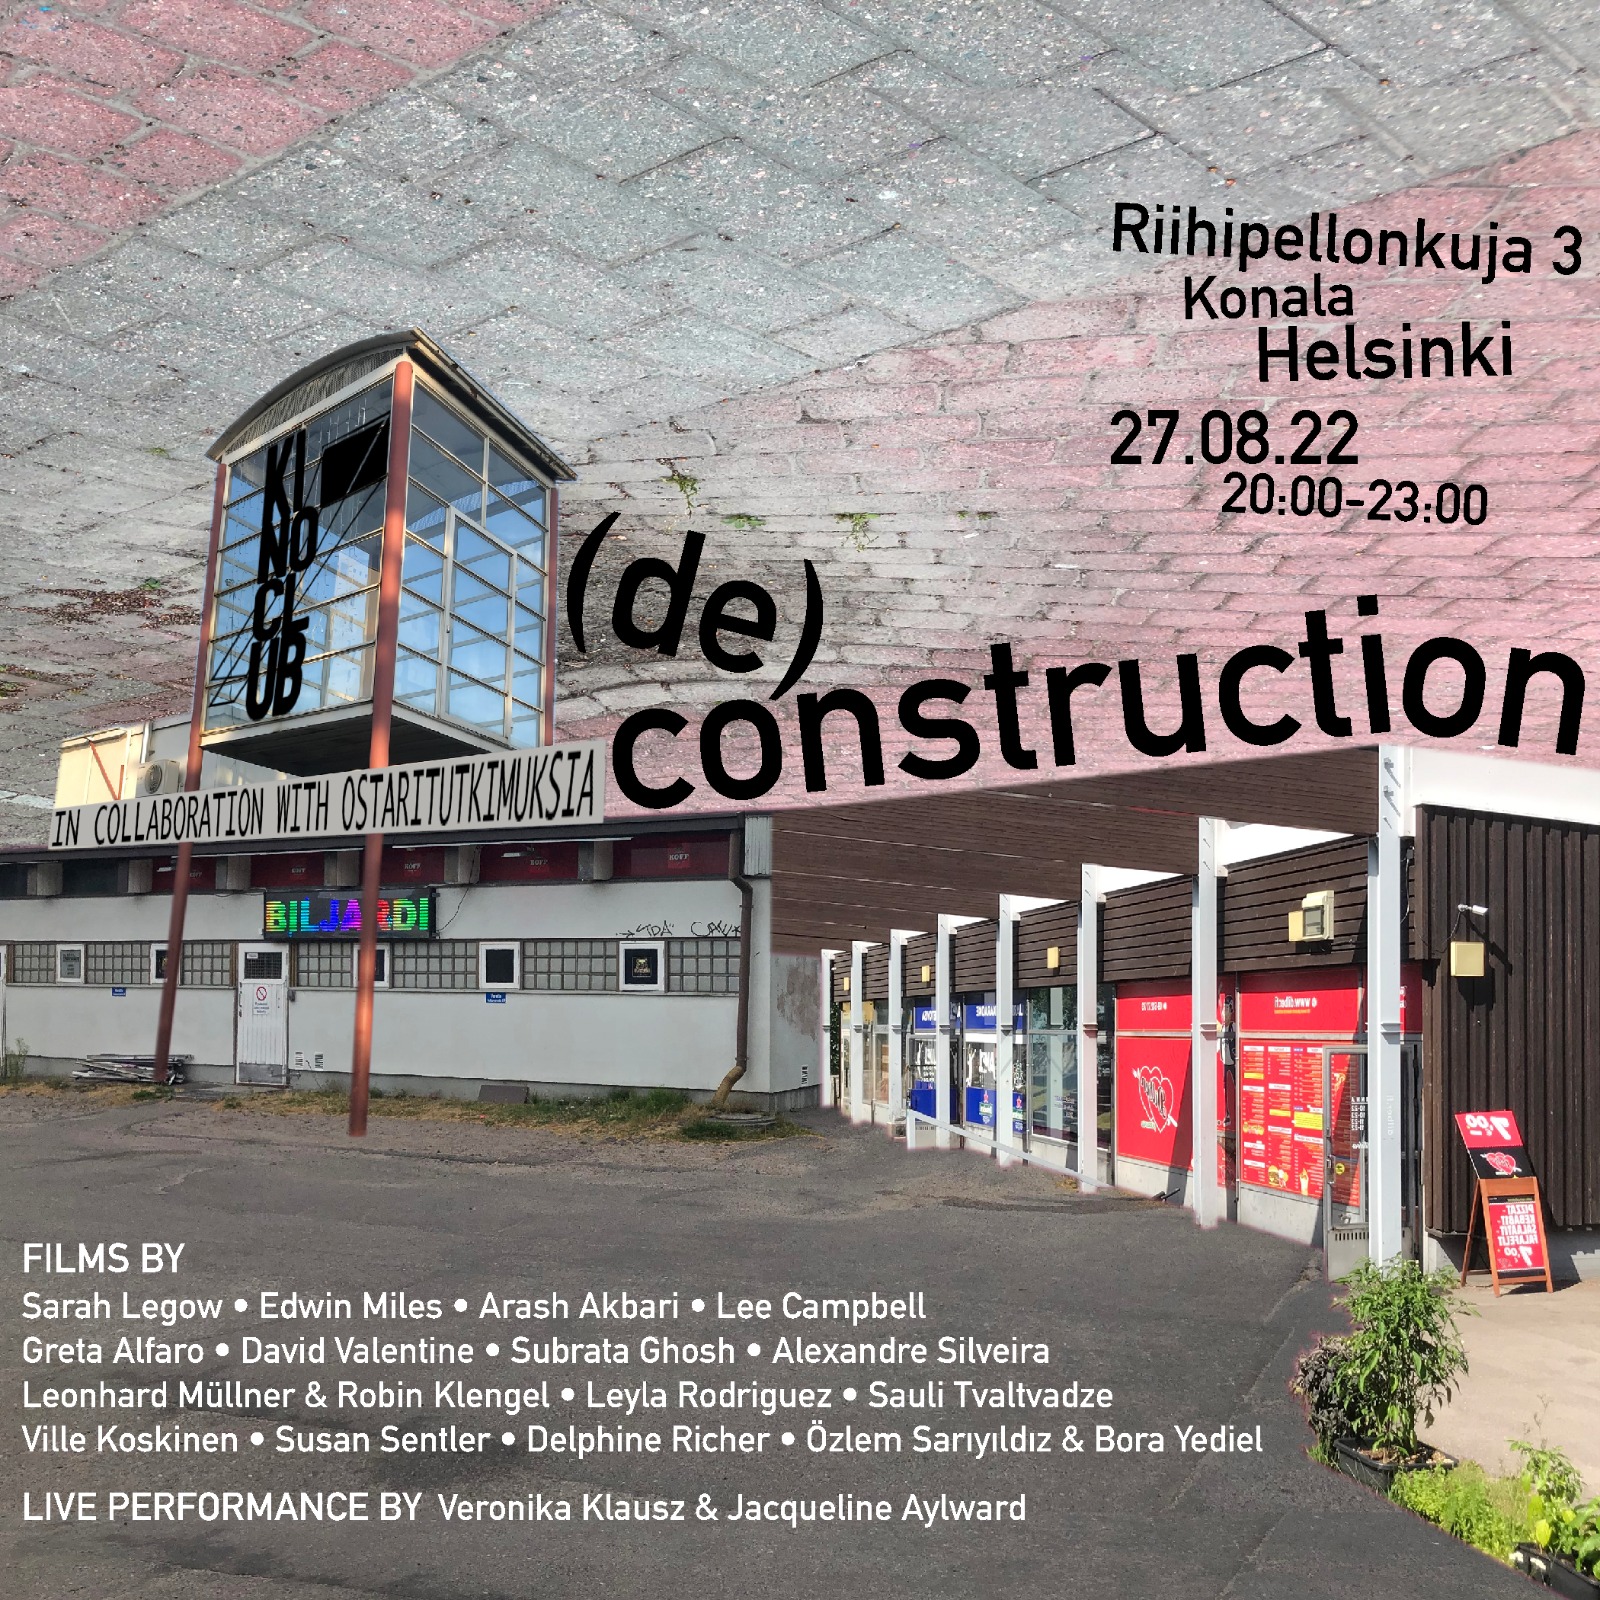 Boom by Leyla Rodriguez @ the (de)construction a site-specific screening event at the Konalanvuoren Ostoskeskus, Kino Club, Helsinki/ FINNLAND